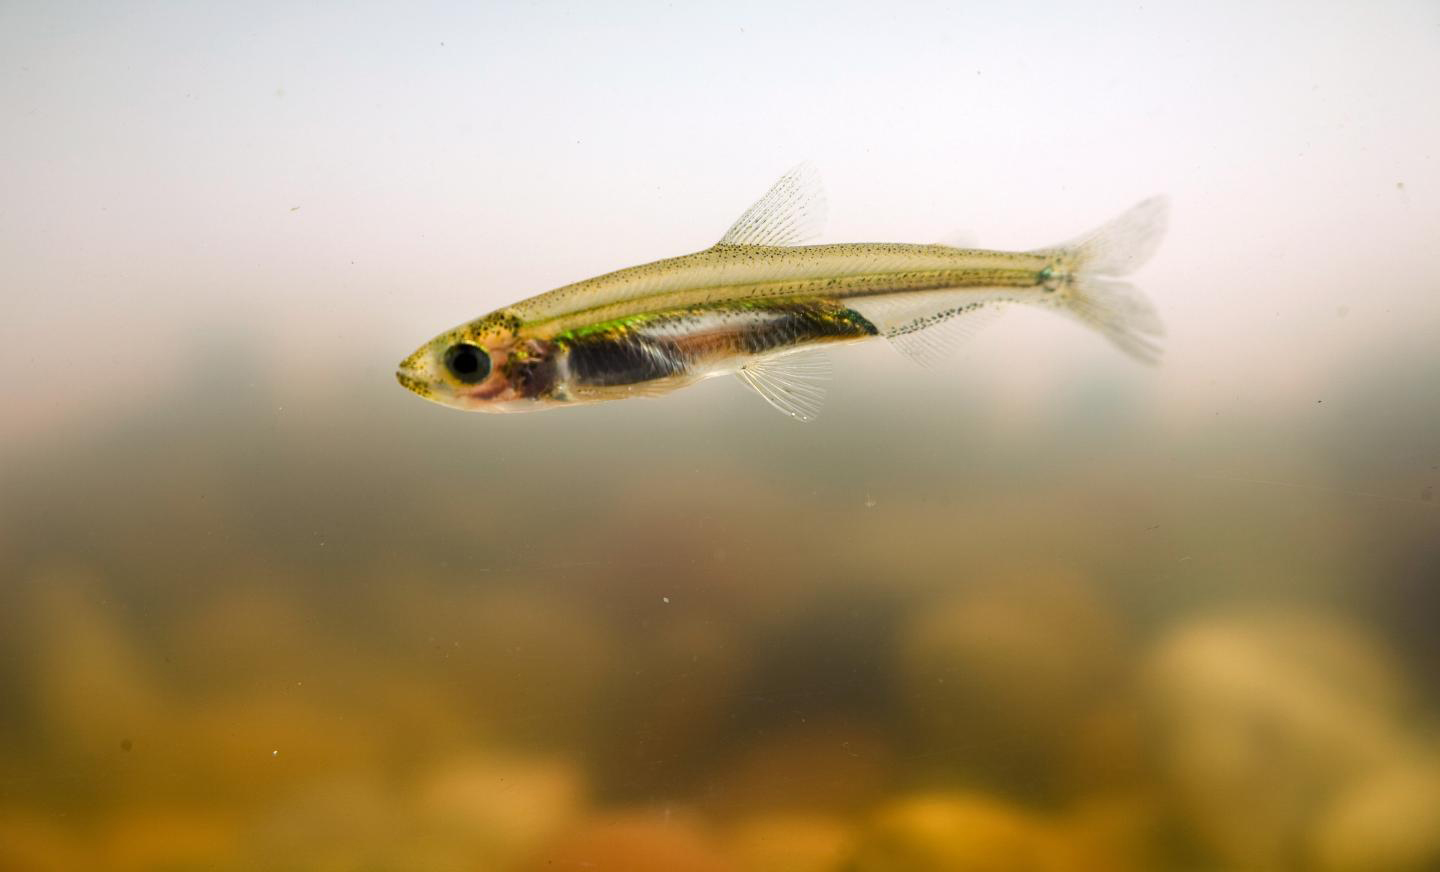 Juvenile-of-Smelt-fish